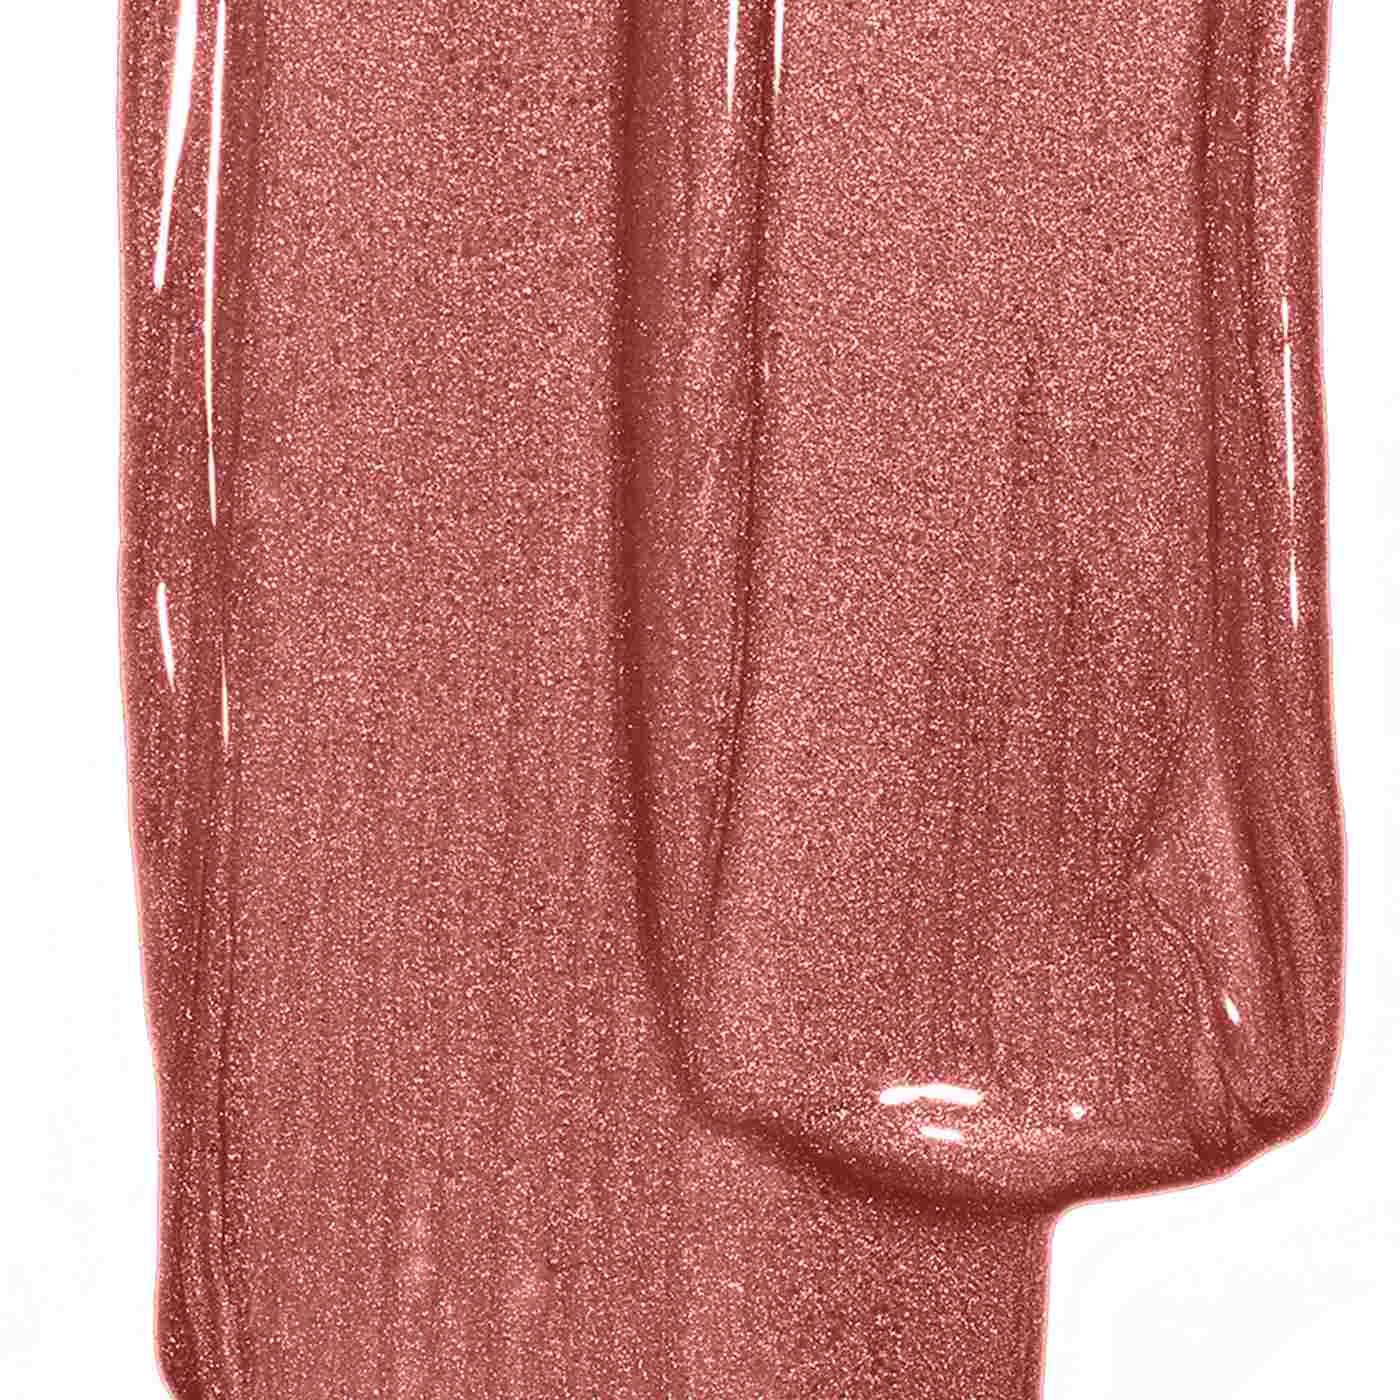 Revlon Super Lustrous The Gloss, Rosy Future; image 3 of 9